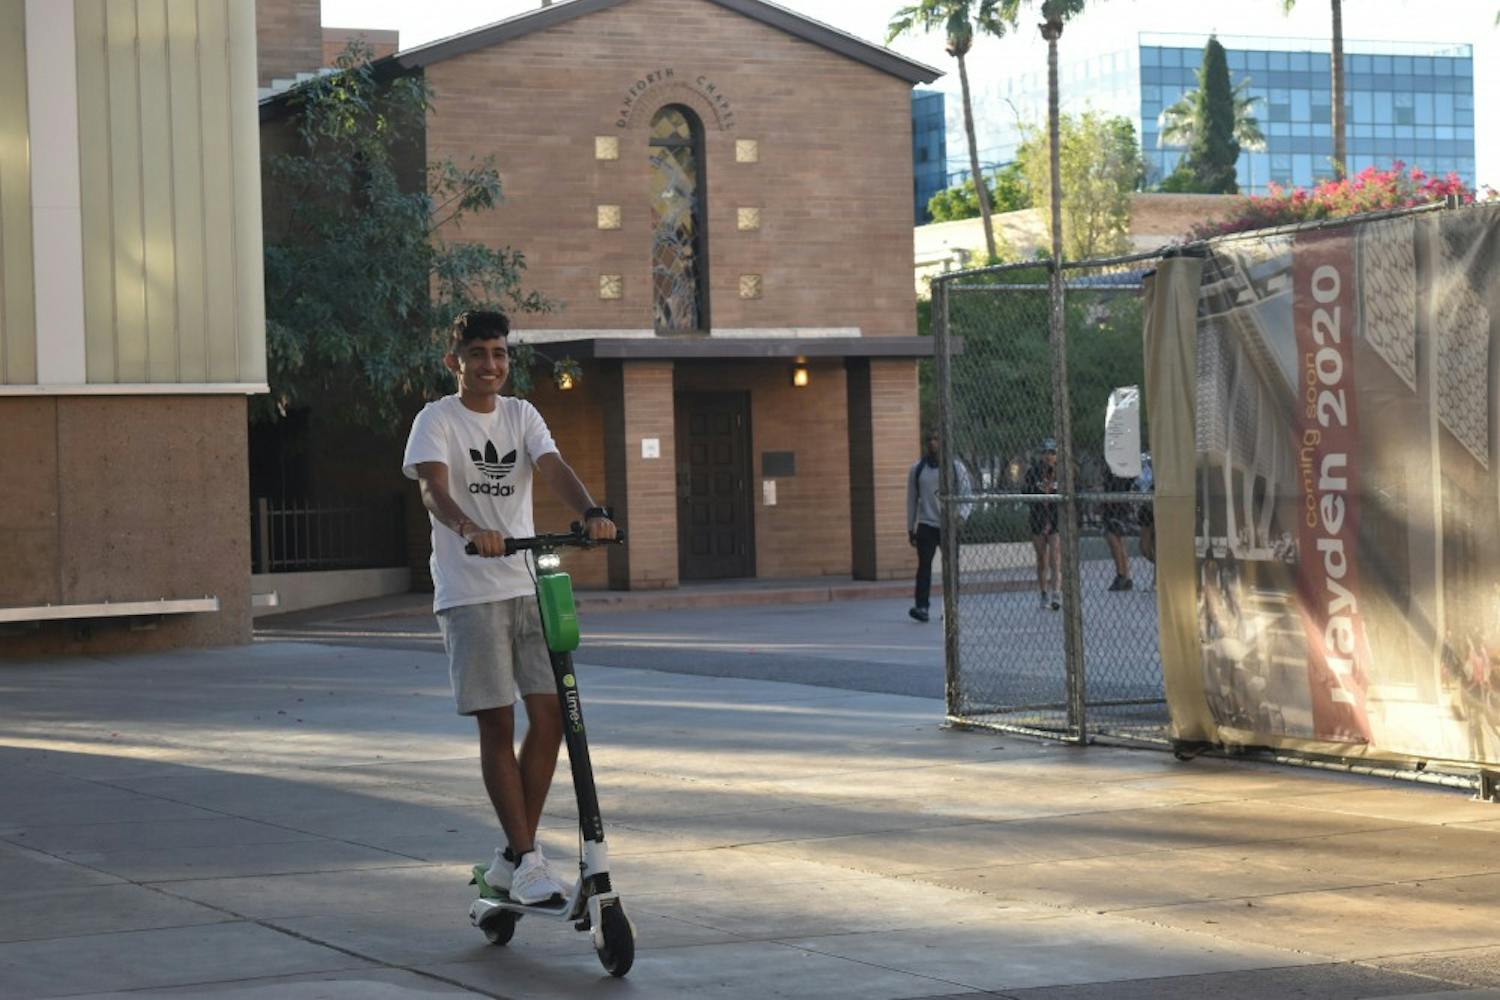 Purneet Pabla rides Lime scooter despite ban